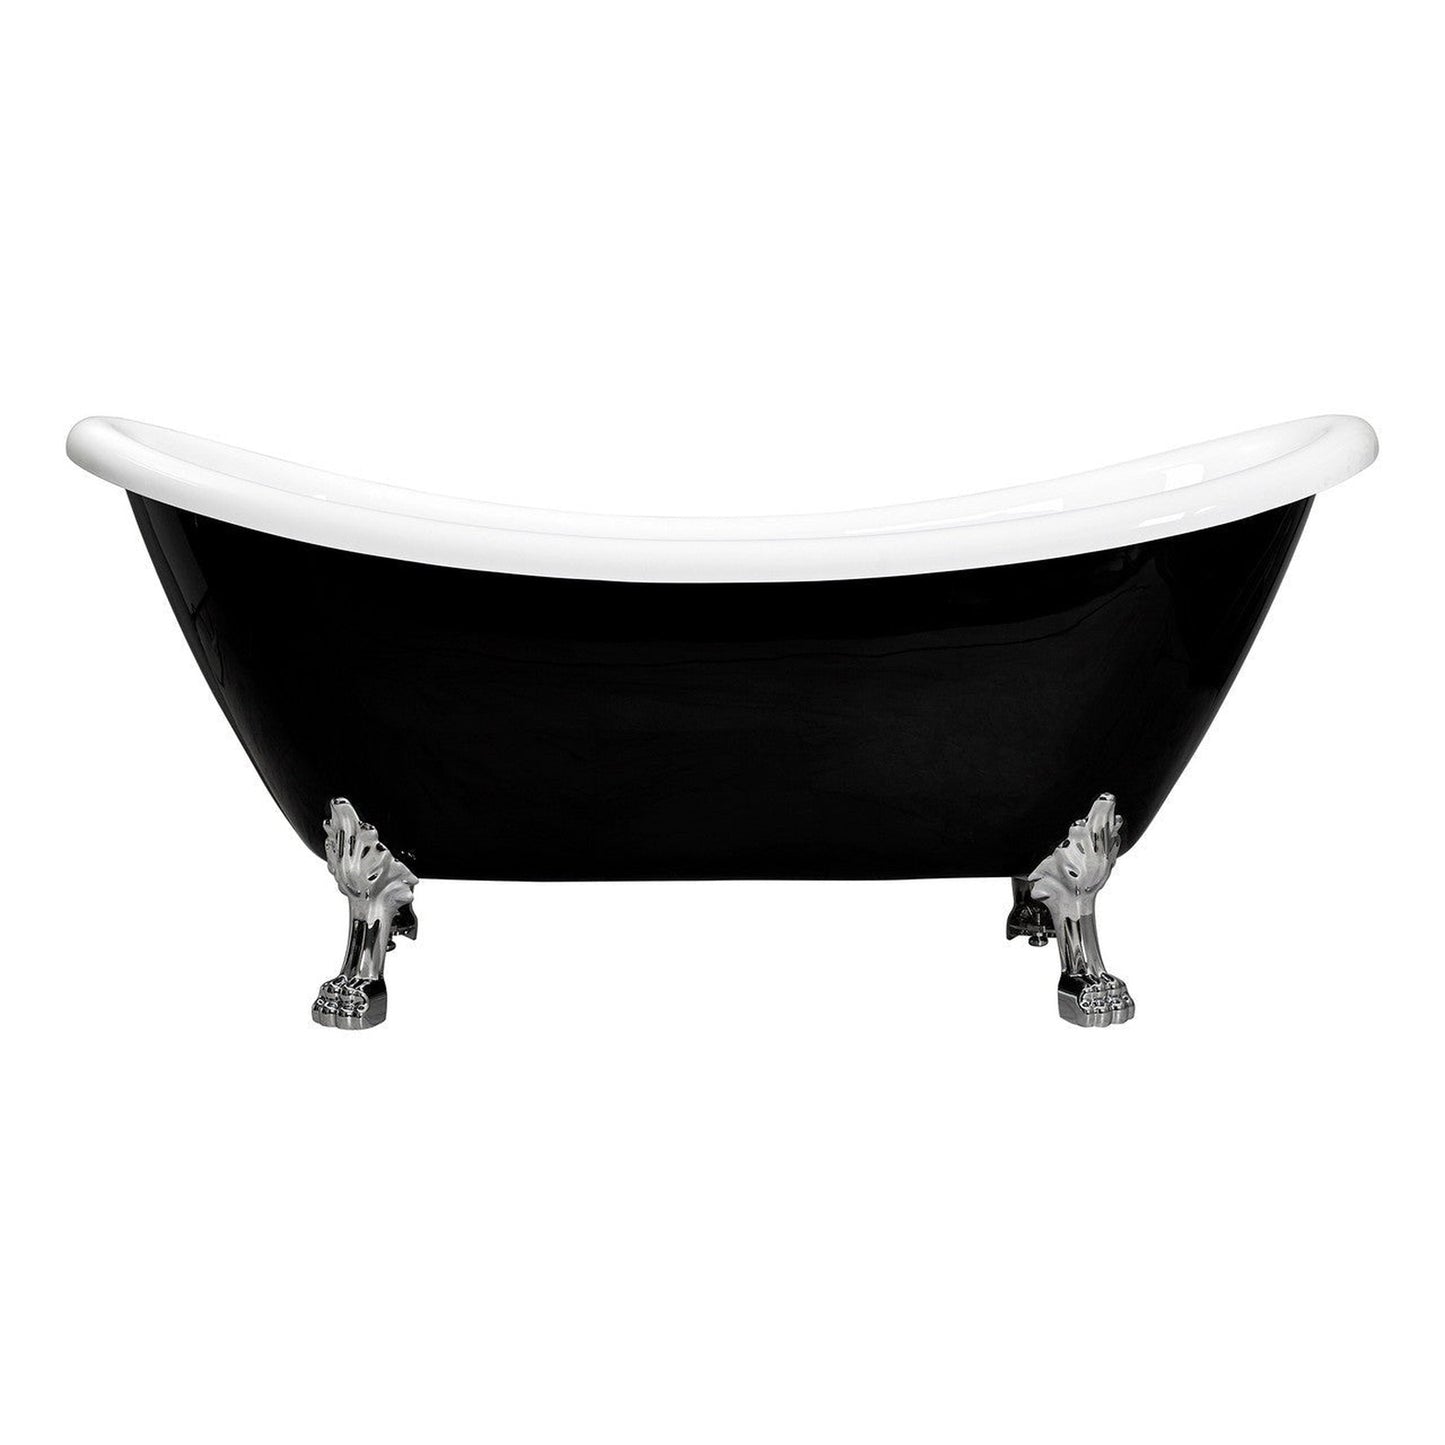 Castello USA Daphne 70" Black Acrylic Freestanding Bathtub With Chrome Feet and Drain